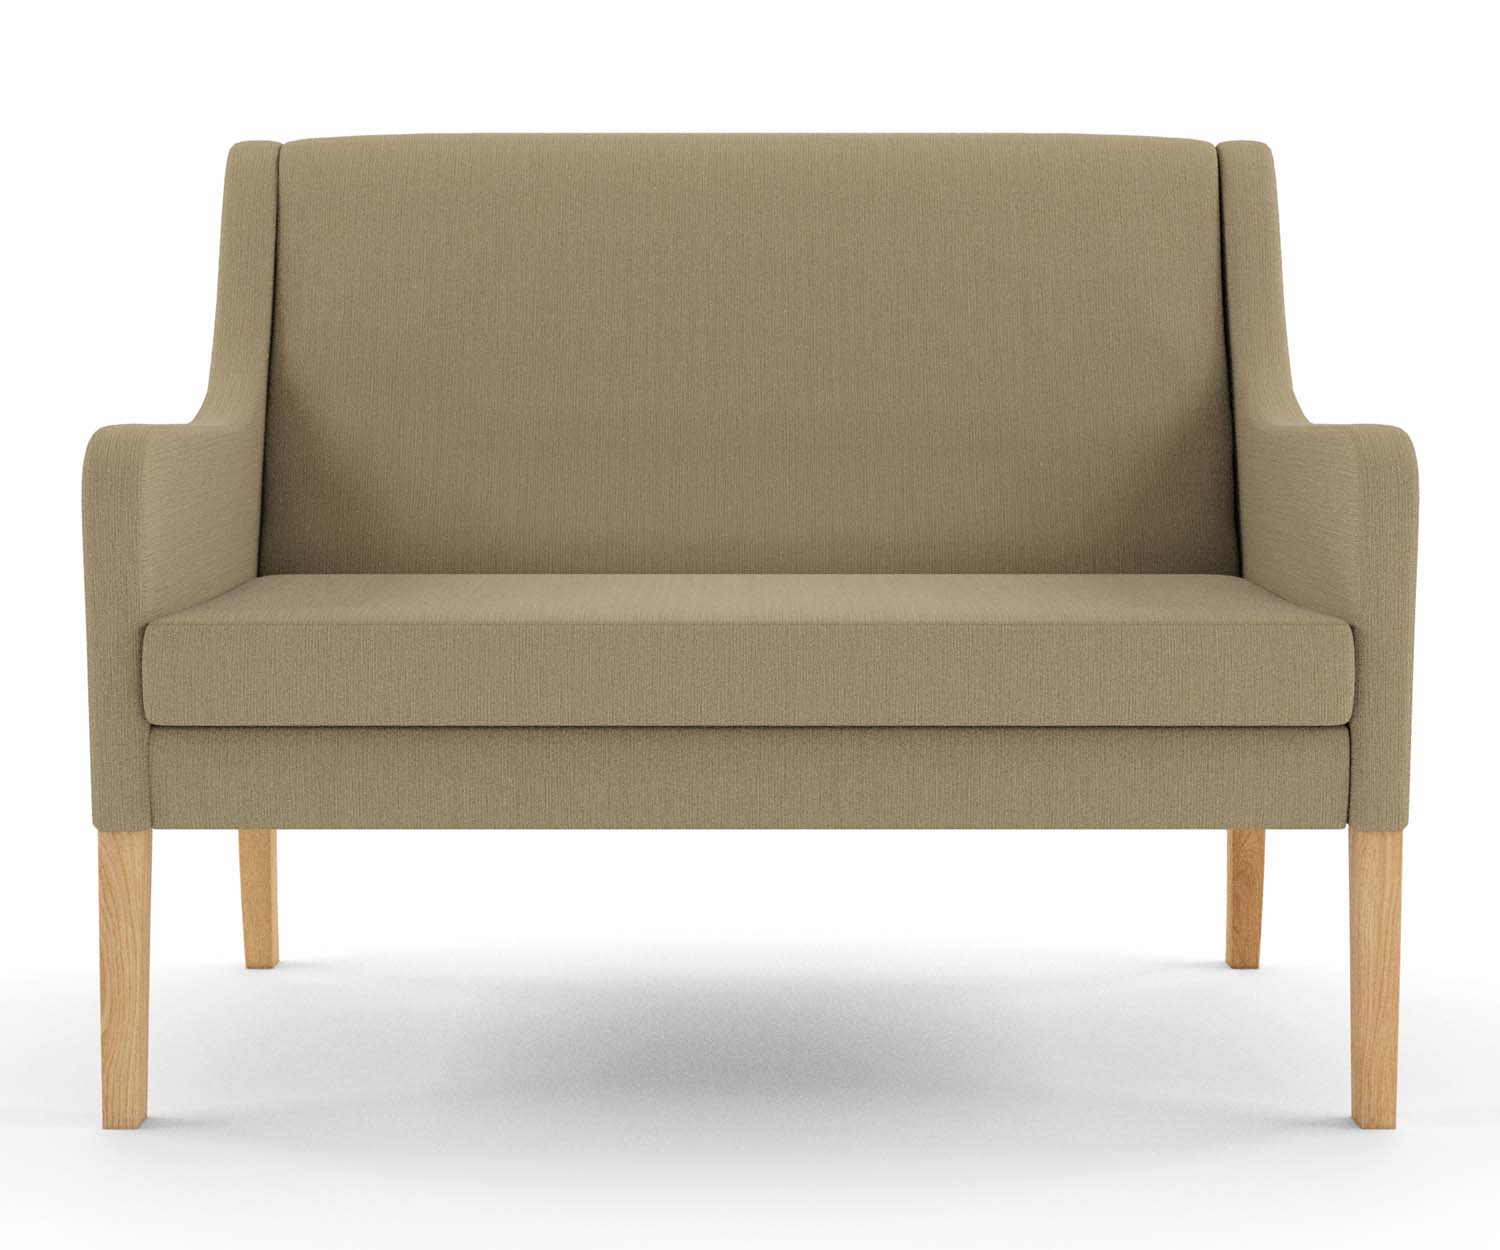 Zed sofa 2 seater